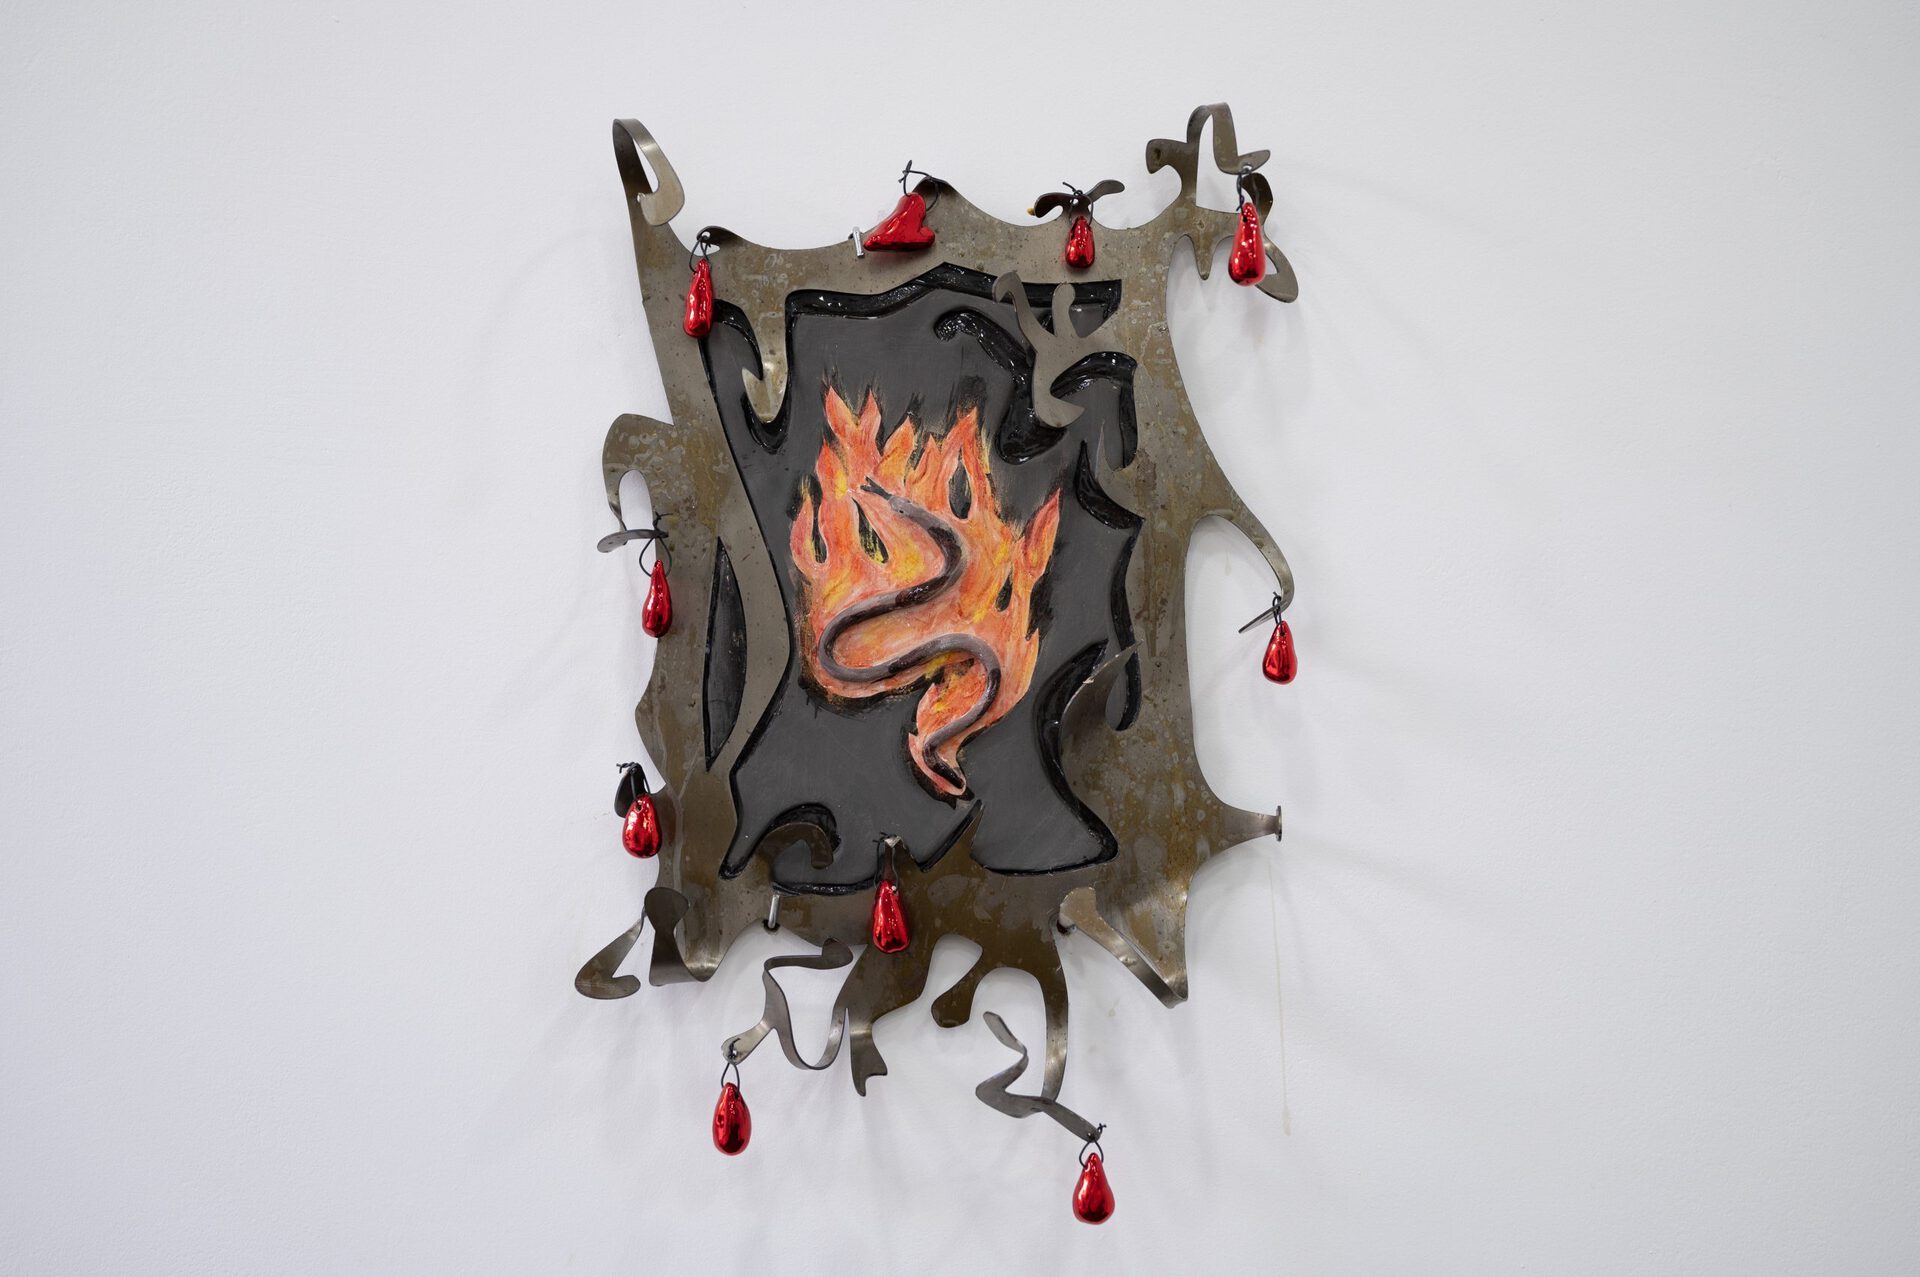 Gvantsa Jishkariani, UNGRATEFUL CUNTS BURNING IN THE FIRE I SET UP, 2022 Metal plate, glazed ceramics, chrome ceramic beads on metal hangers 35 x 53 x 11,5 cm